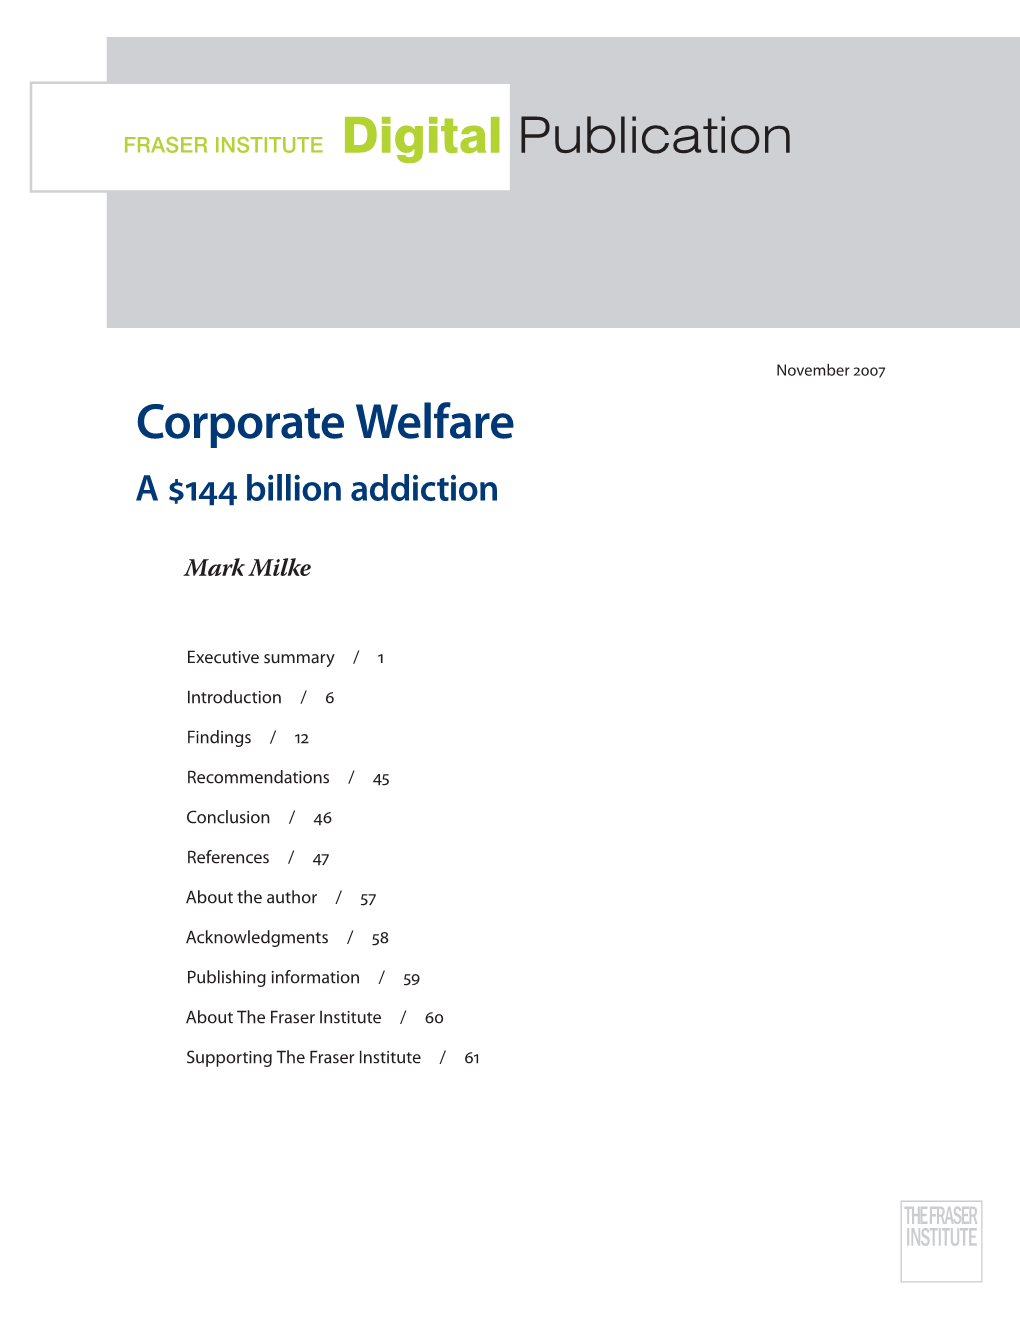 Corporate Welfare a $144 Billion Addiction